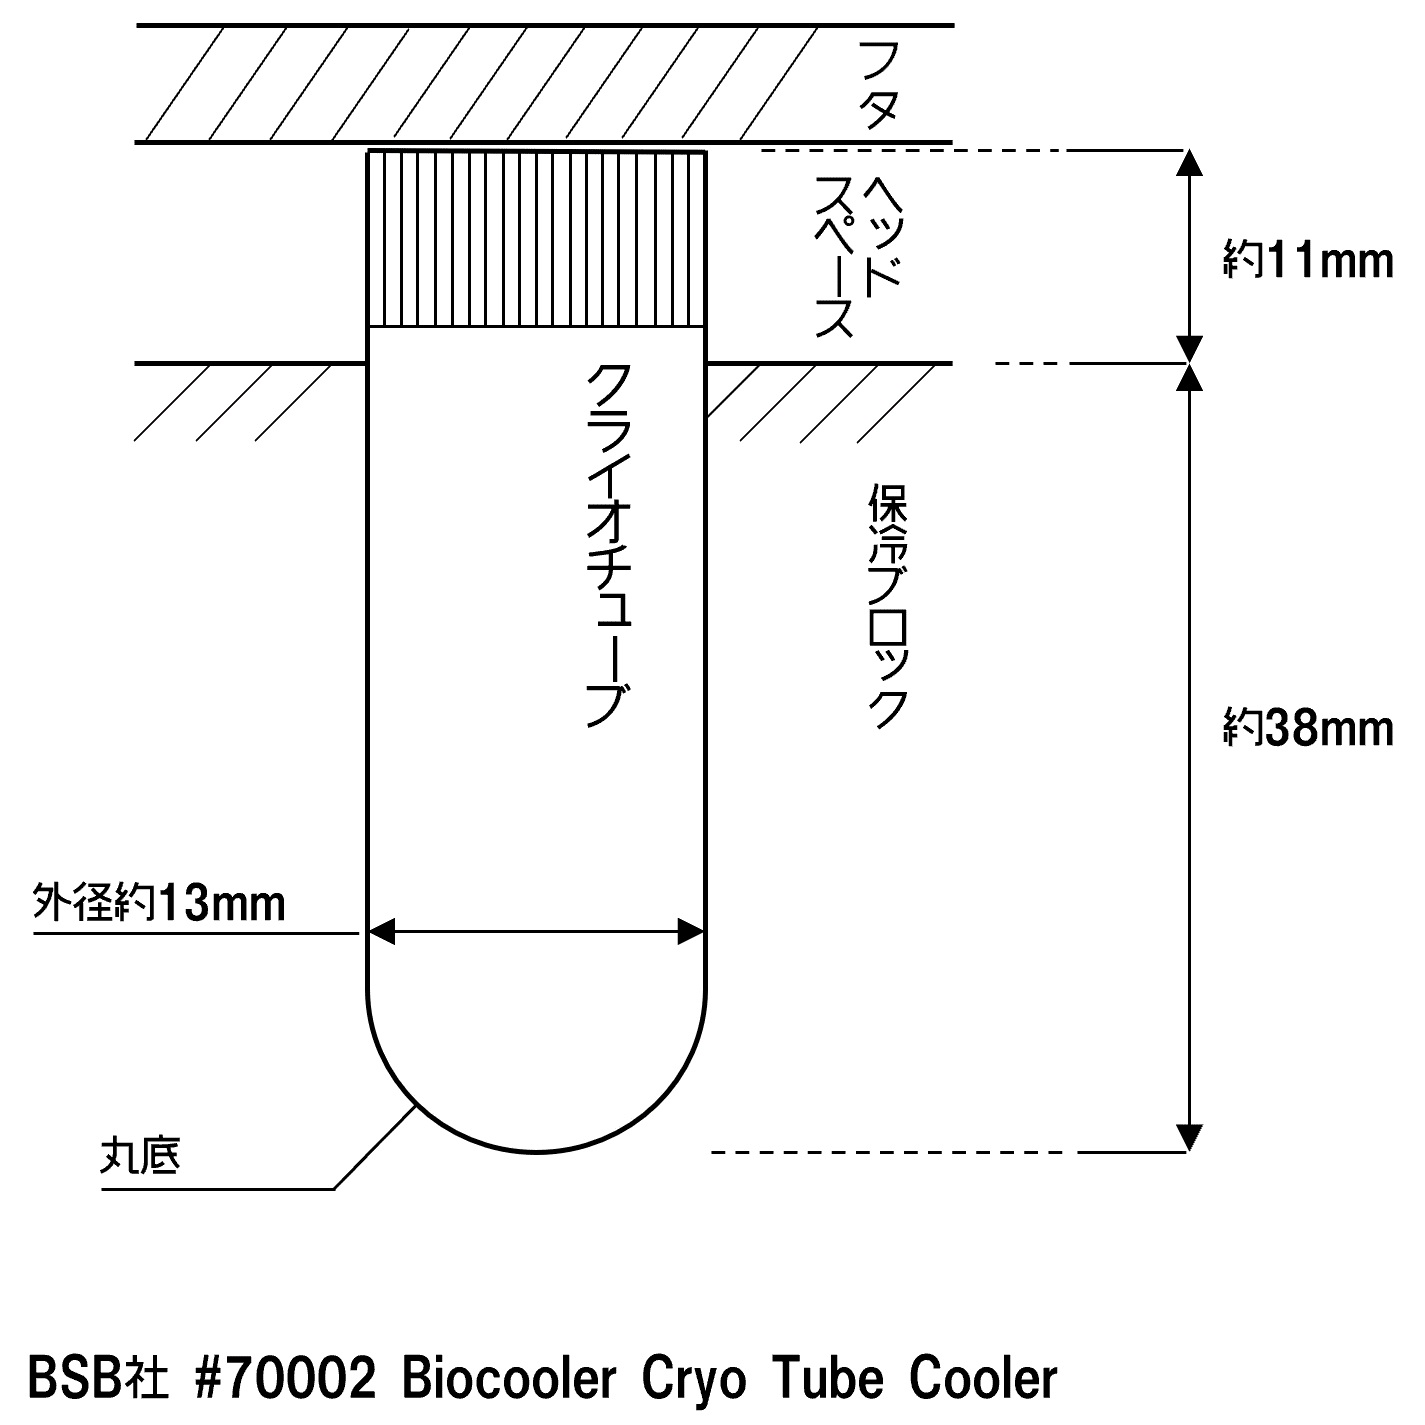 Biocooler Cryo Tube Coolerで使用可能なチューブサイズ